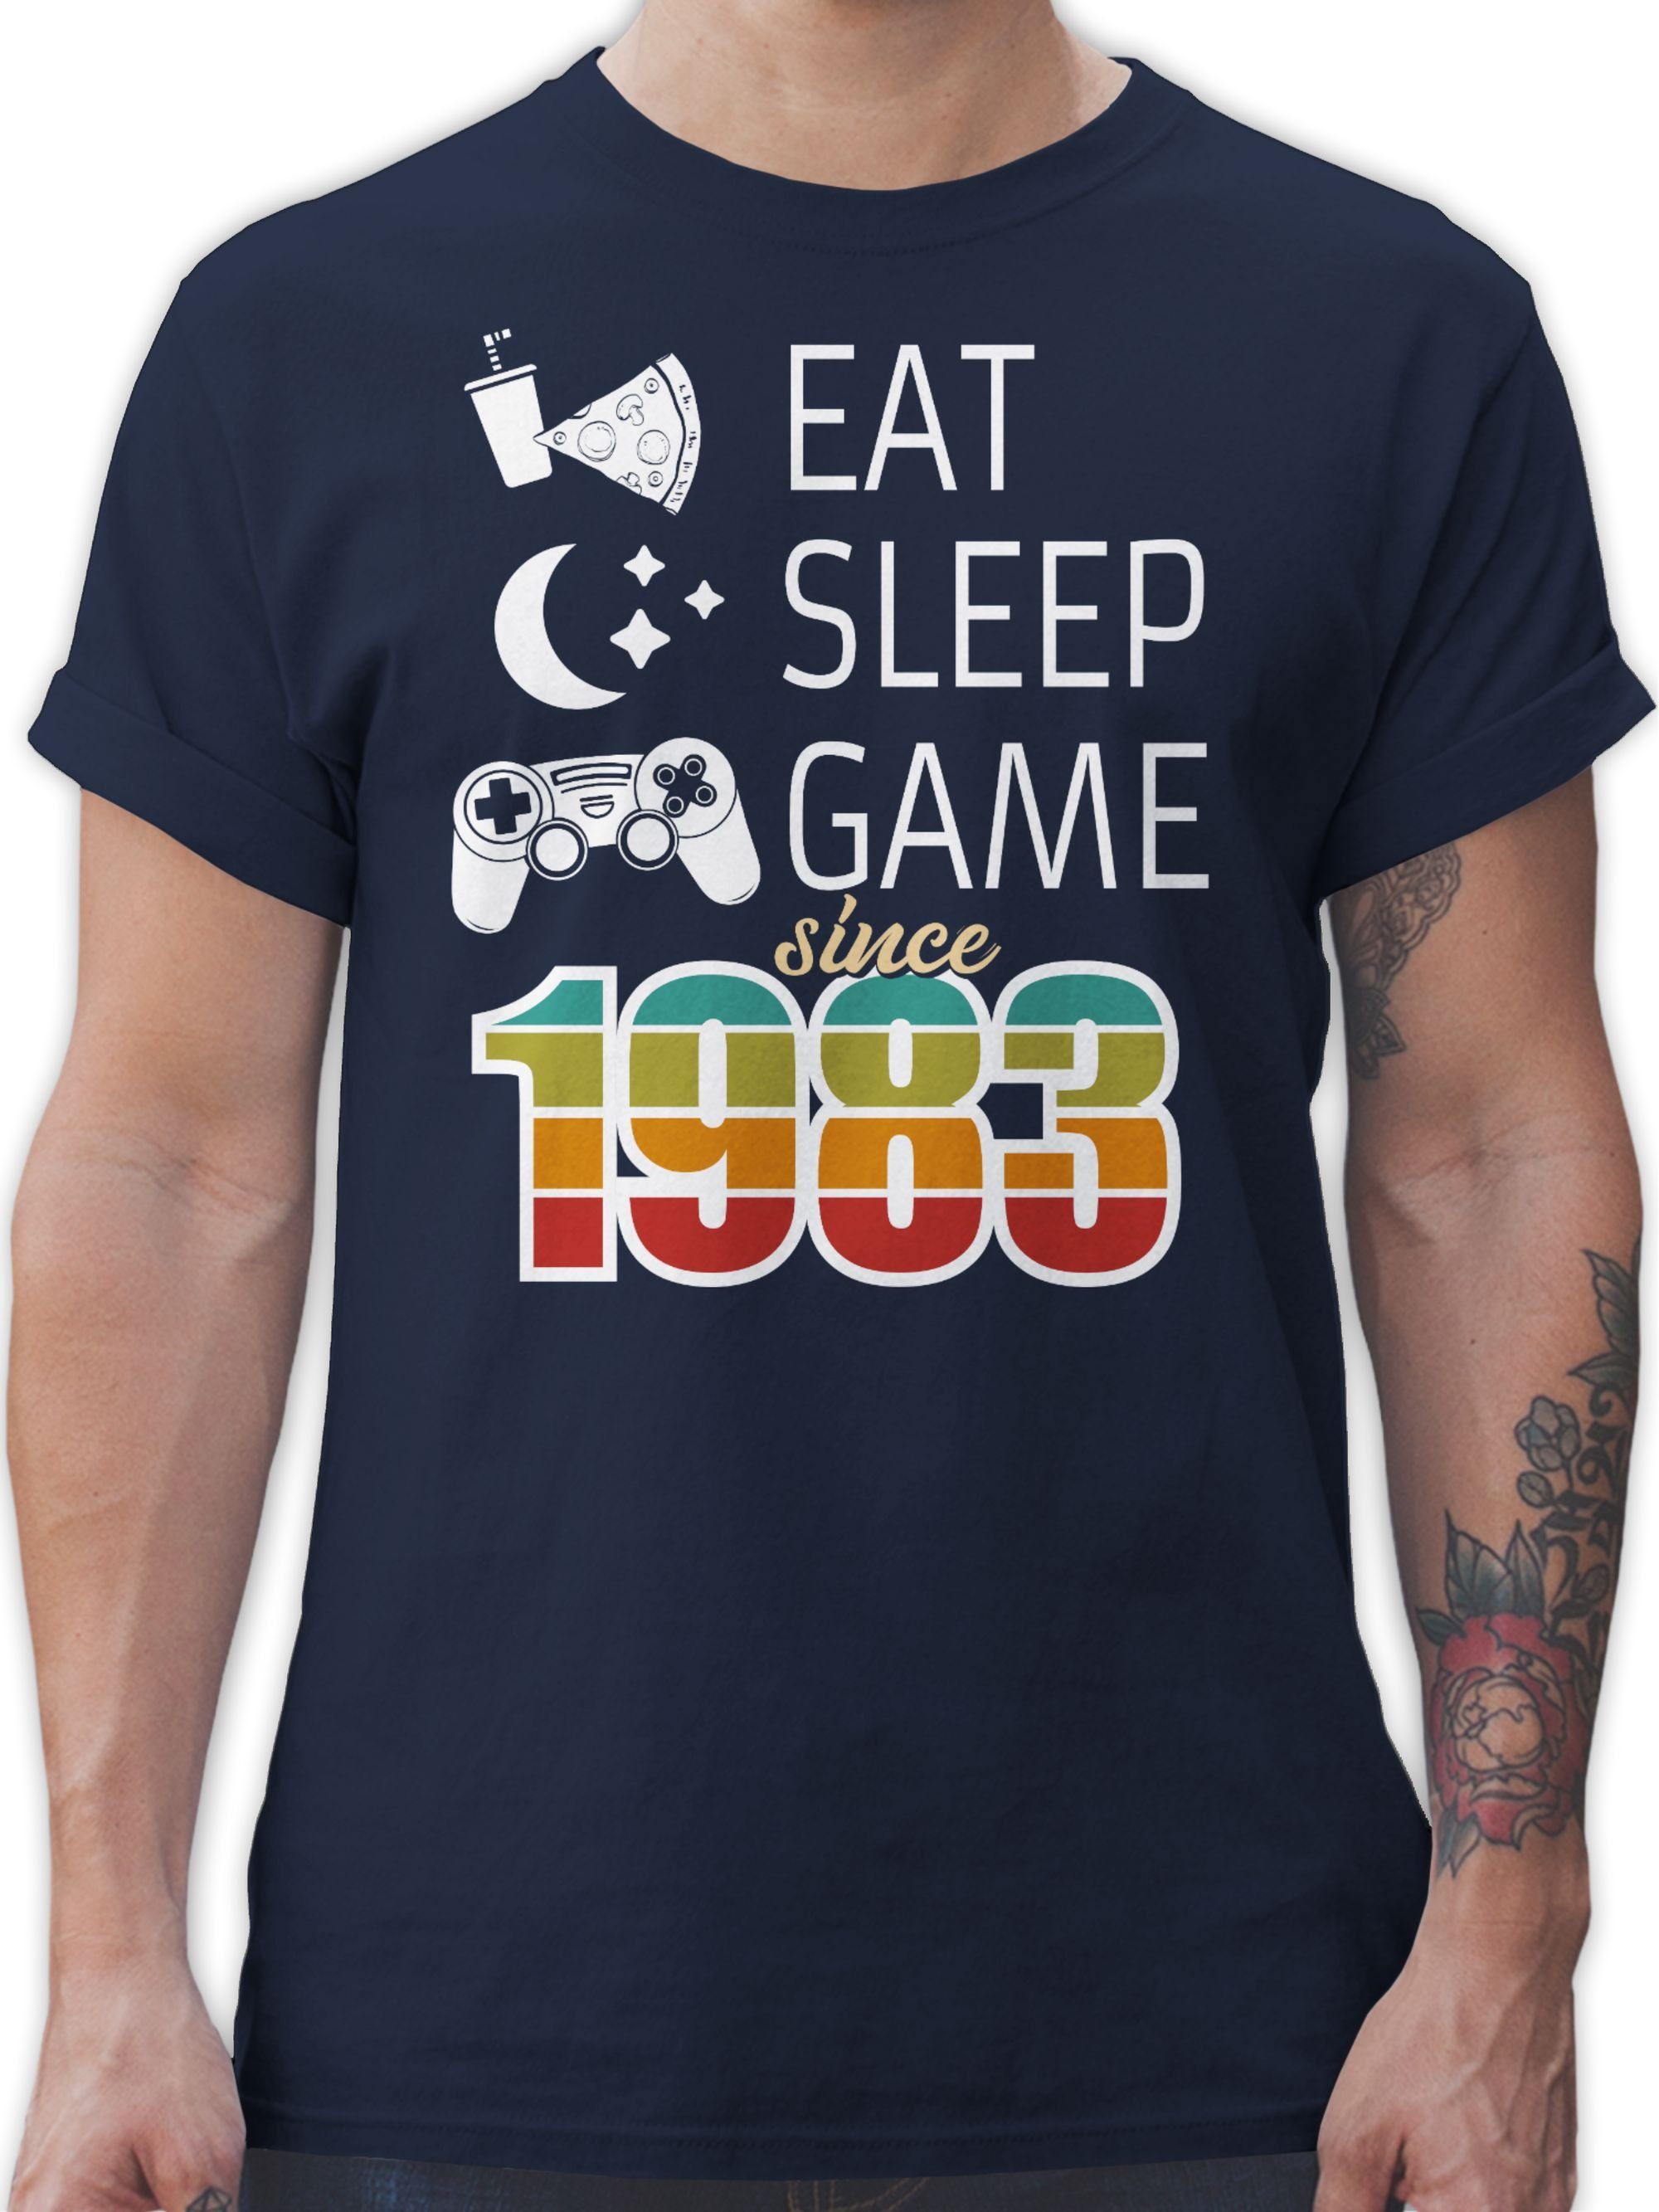 Shirtracer T-Shirt Eat sleep Game since 1983 bunt 40. Geburtstag 02 Navy Blau | T-Shirts